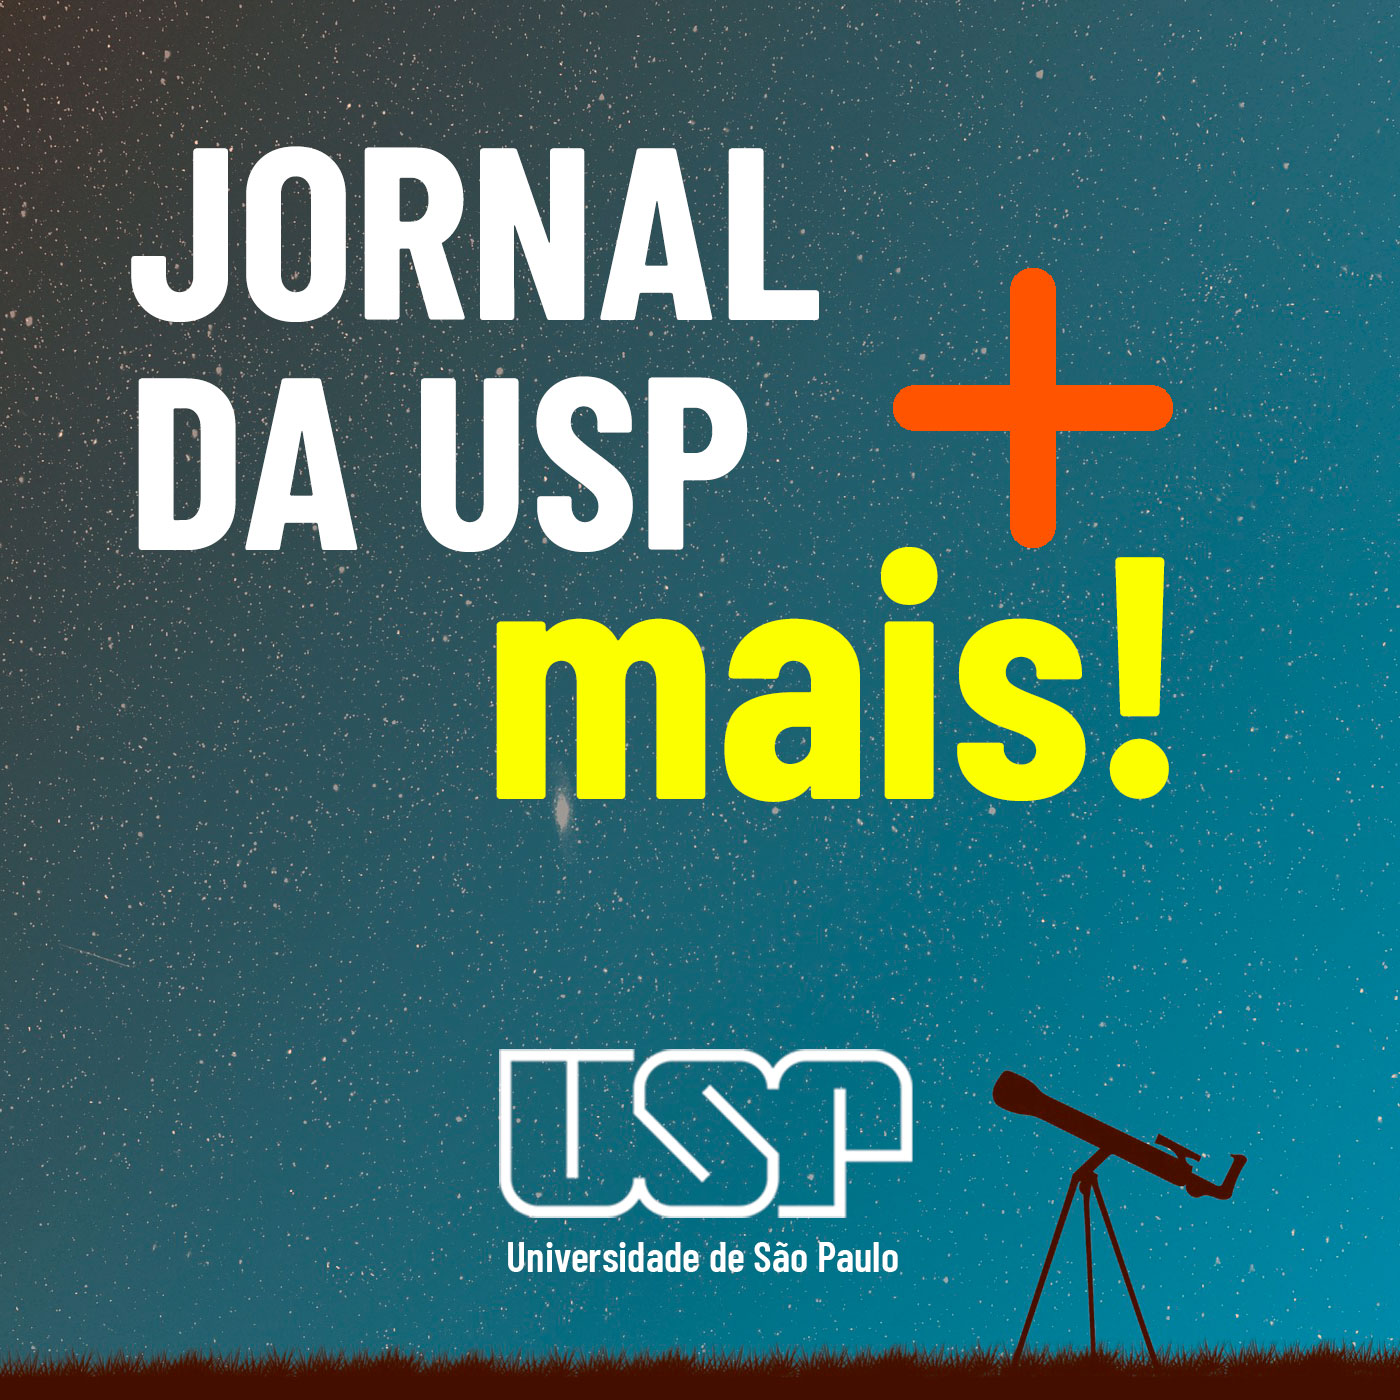 USP . magazine